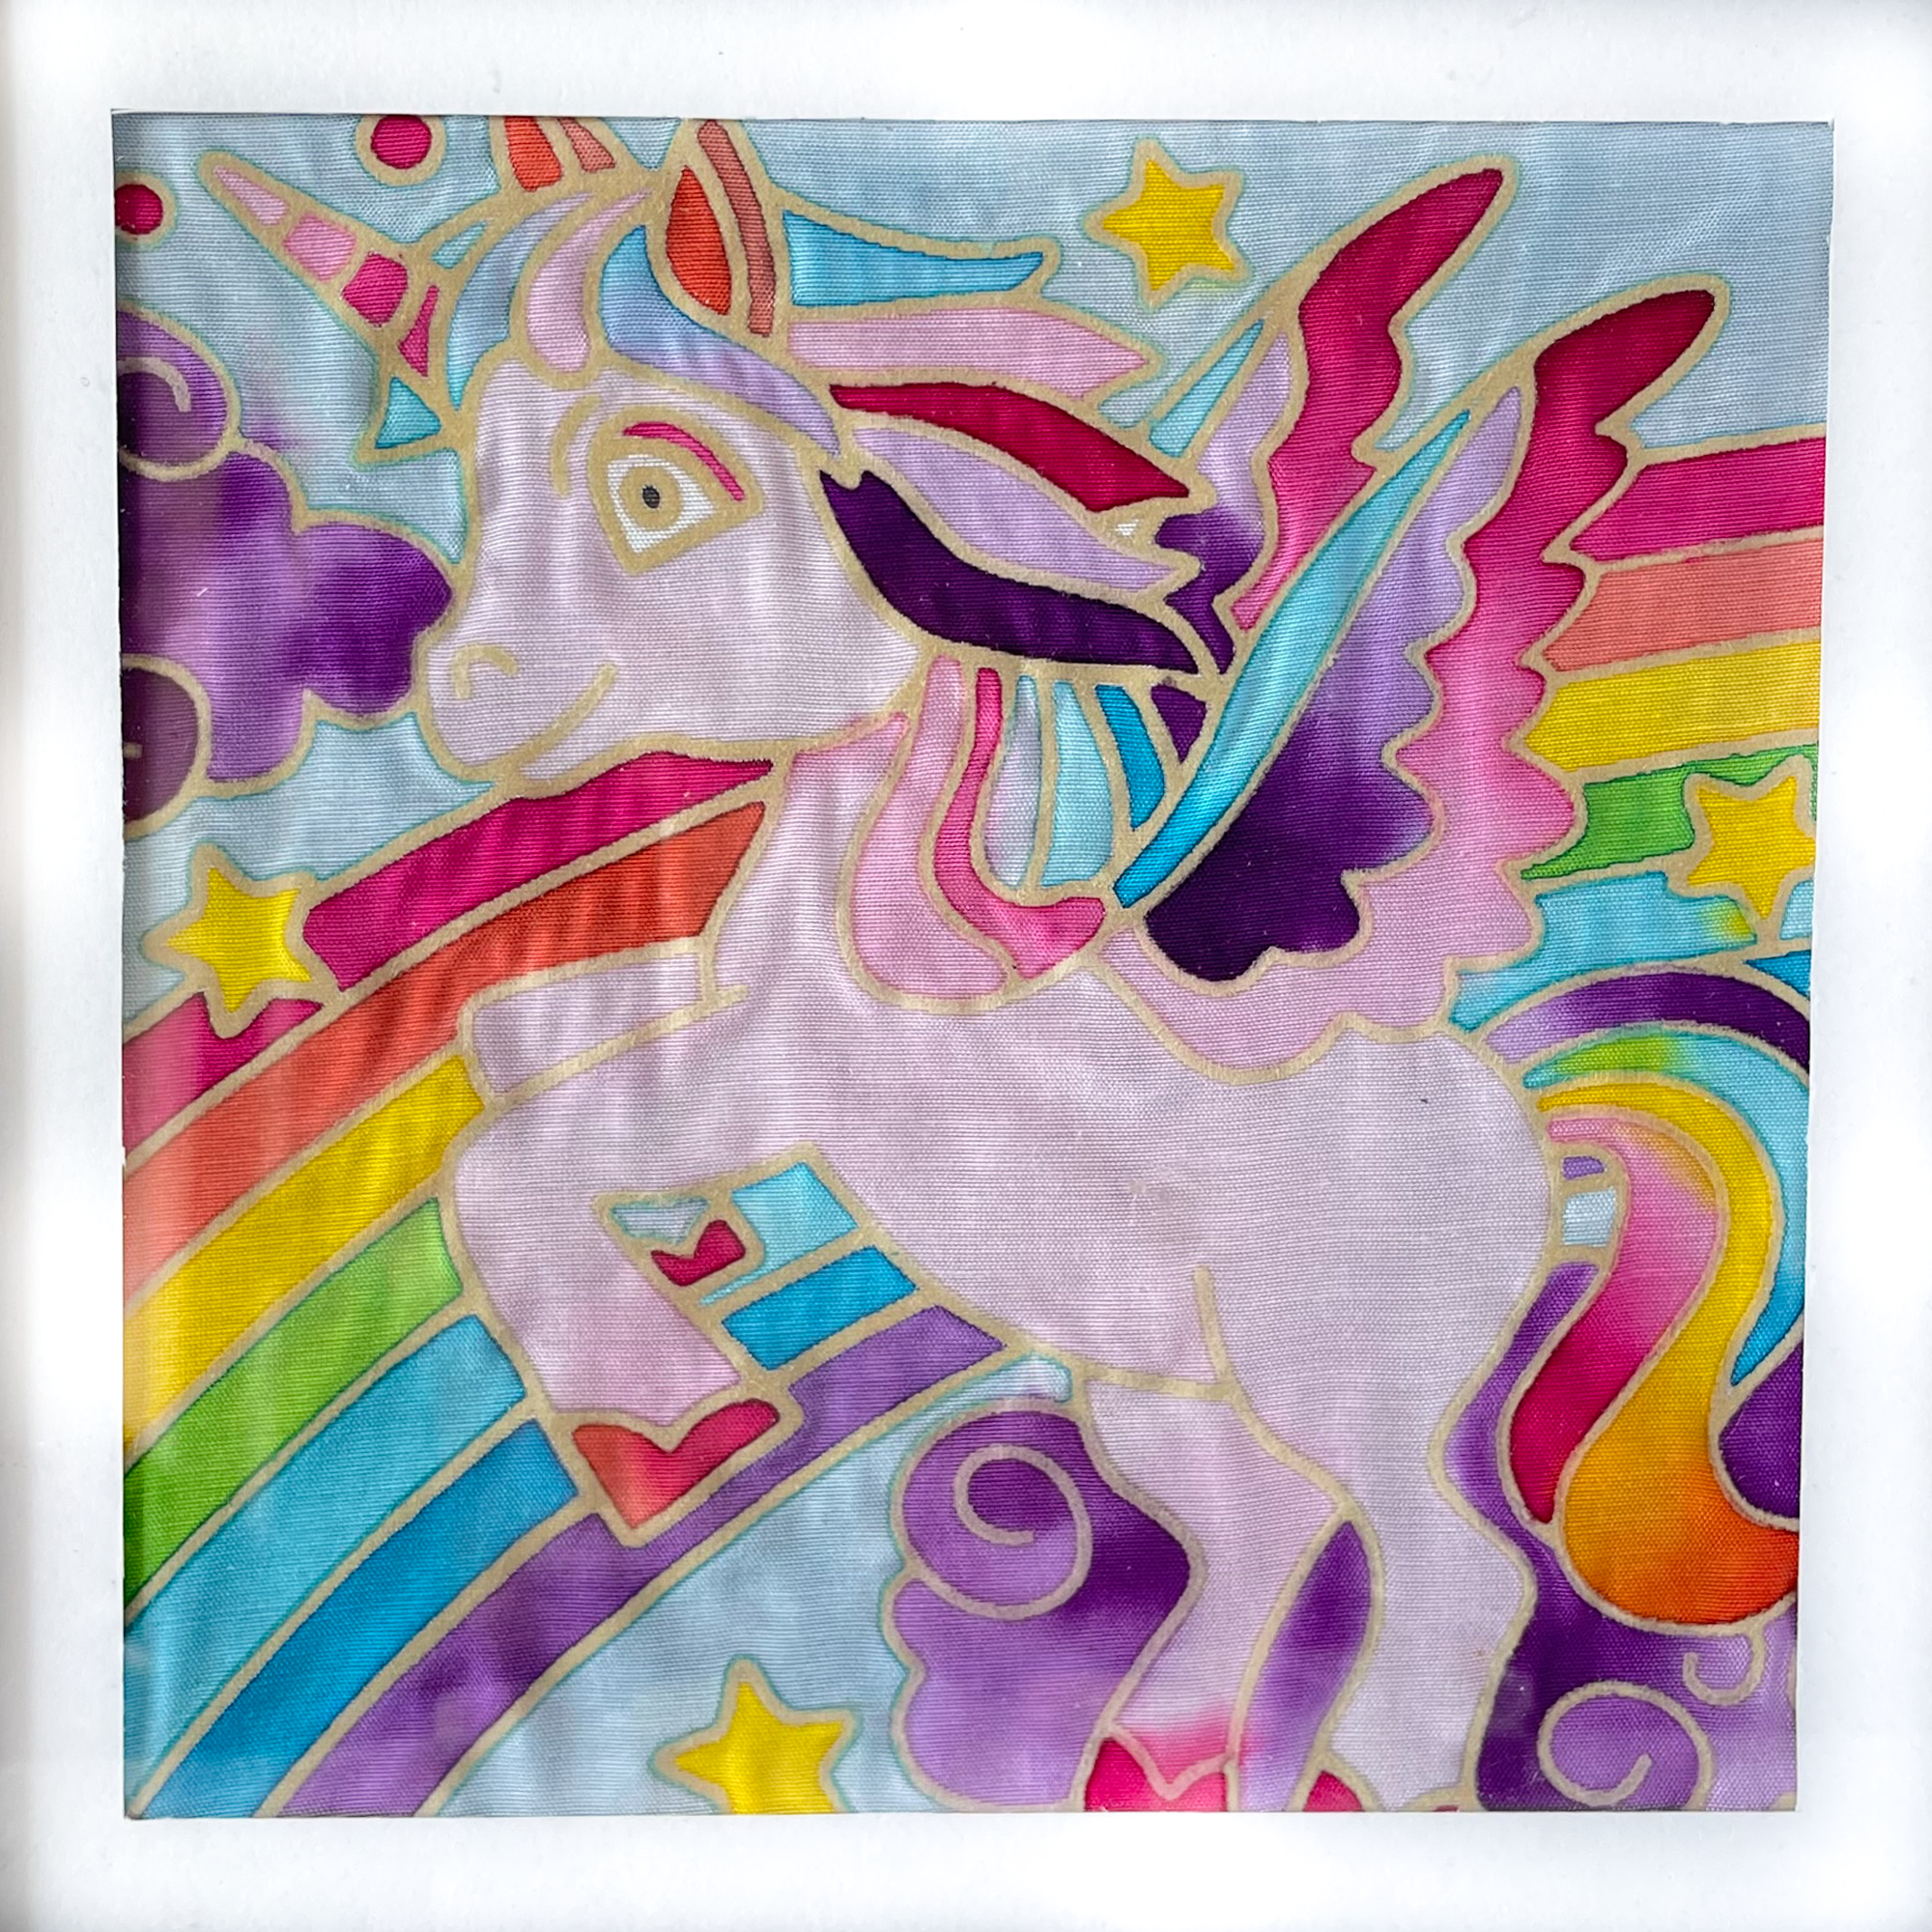 BLACK CANVAS Unicorn Painting Kit (Includes video tutorial)